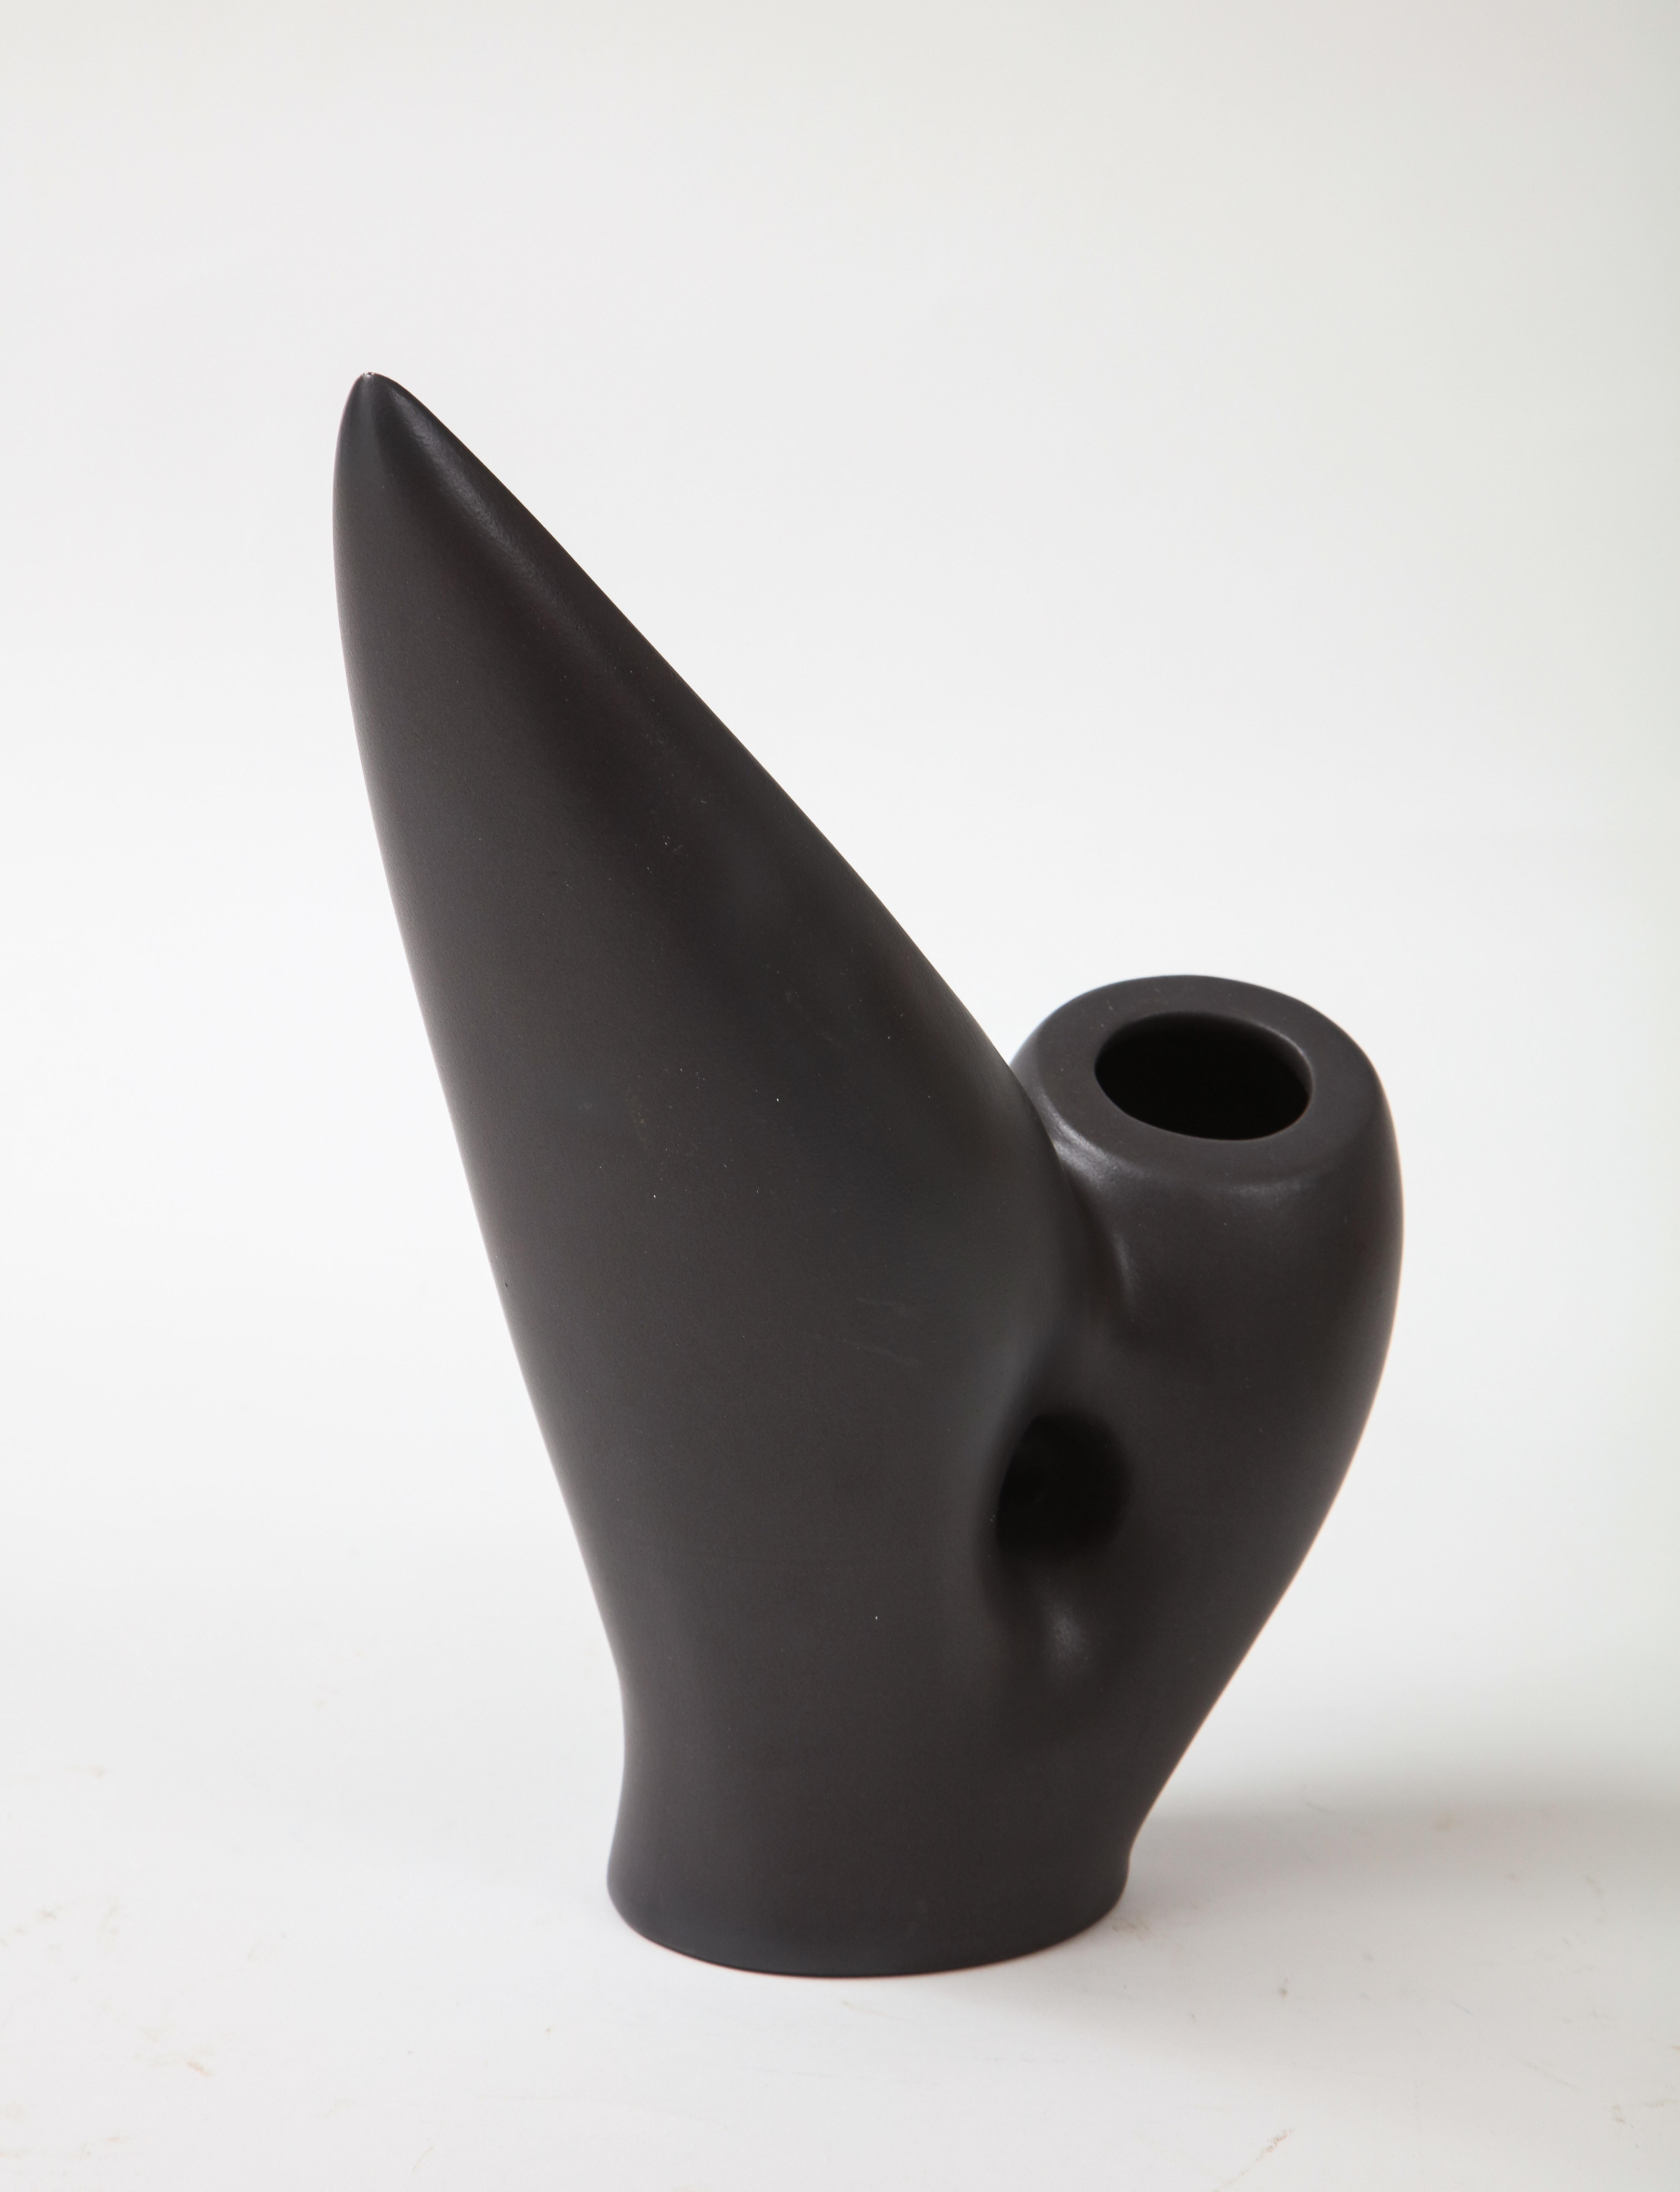 Ceramic Marcel Giraud Black Asymmetrical Vase, Vallauris, France, c. 1950, Signed